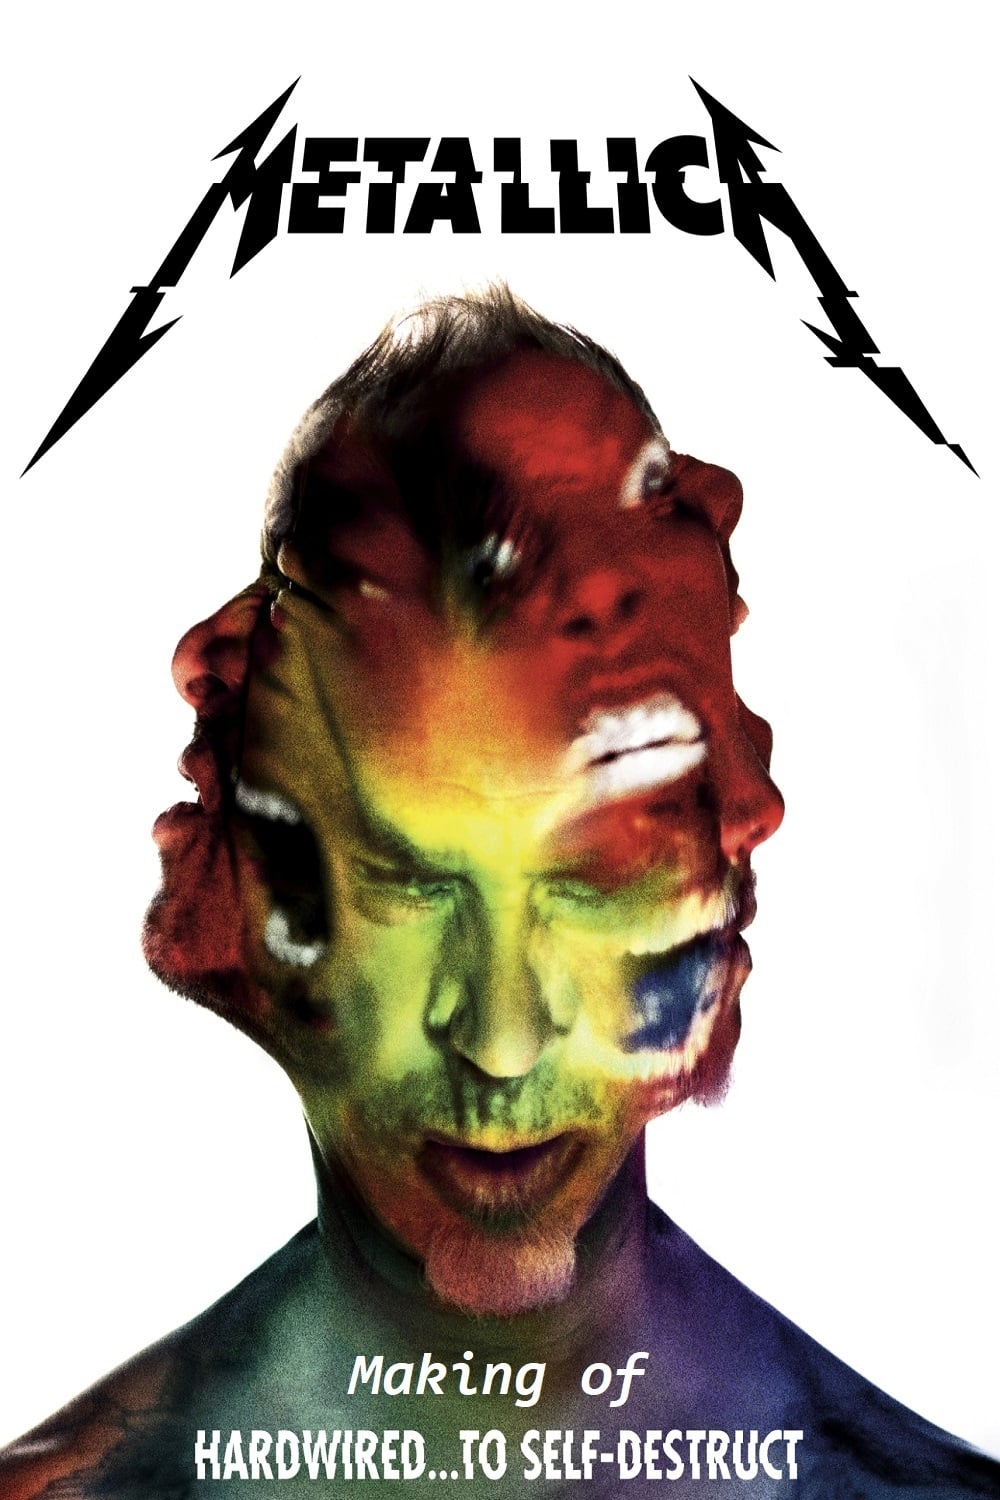 Metallica: Making of Hardwired... to Self-Destruct